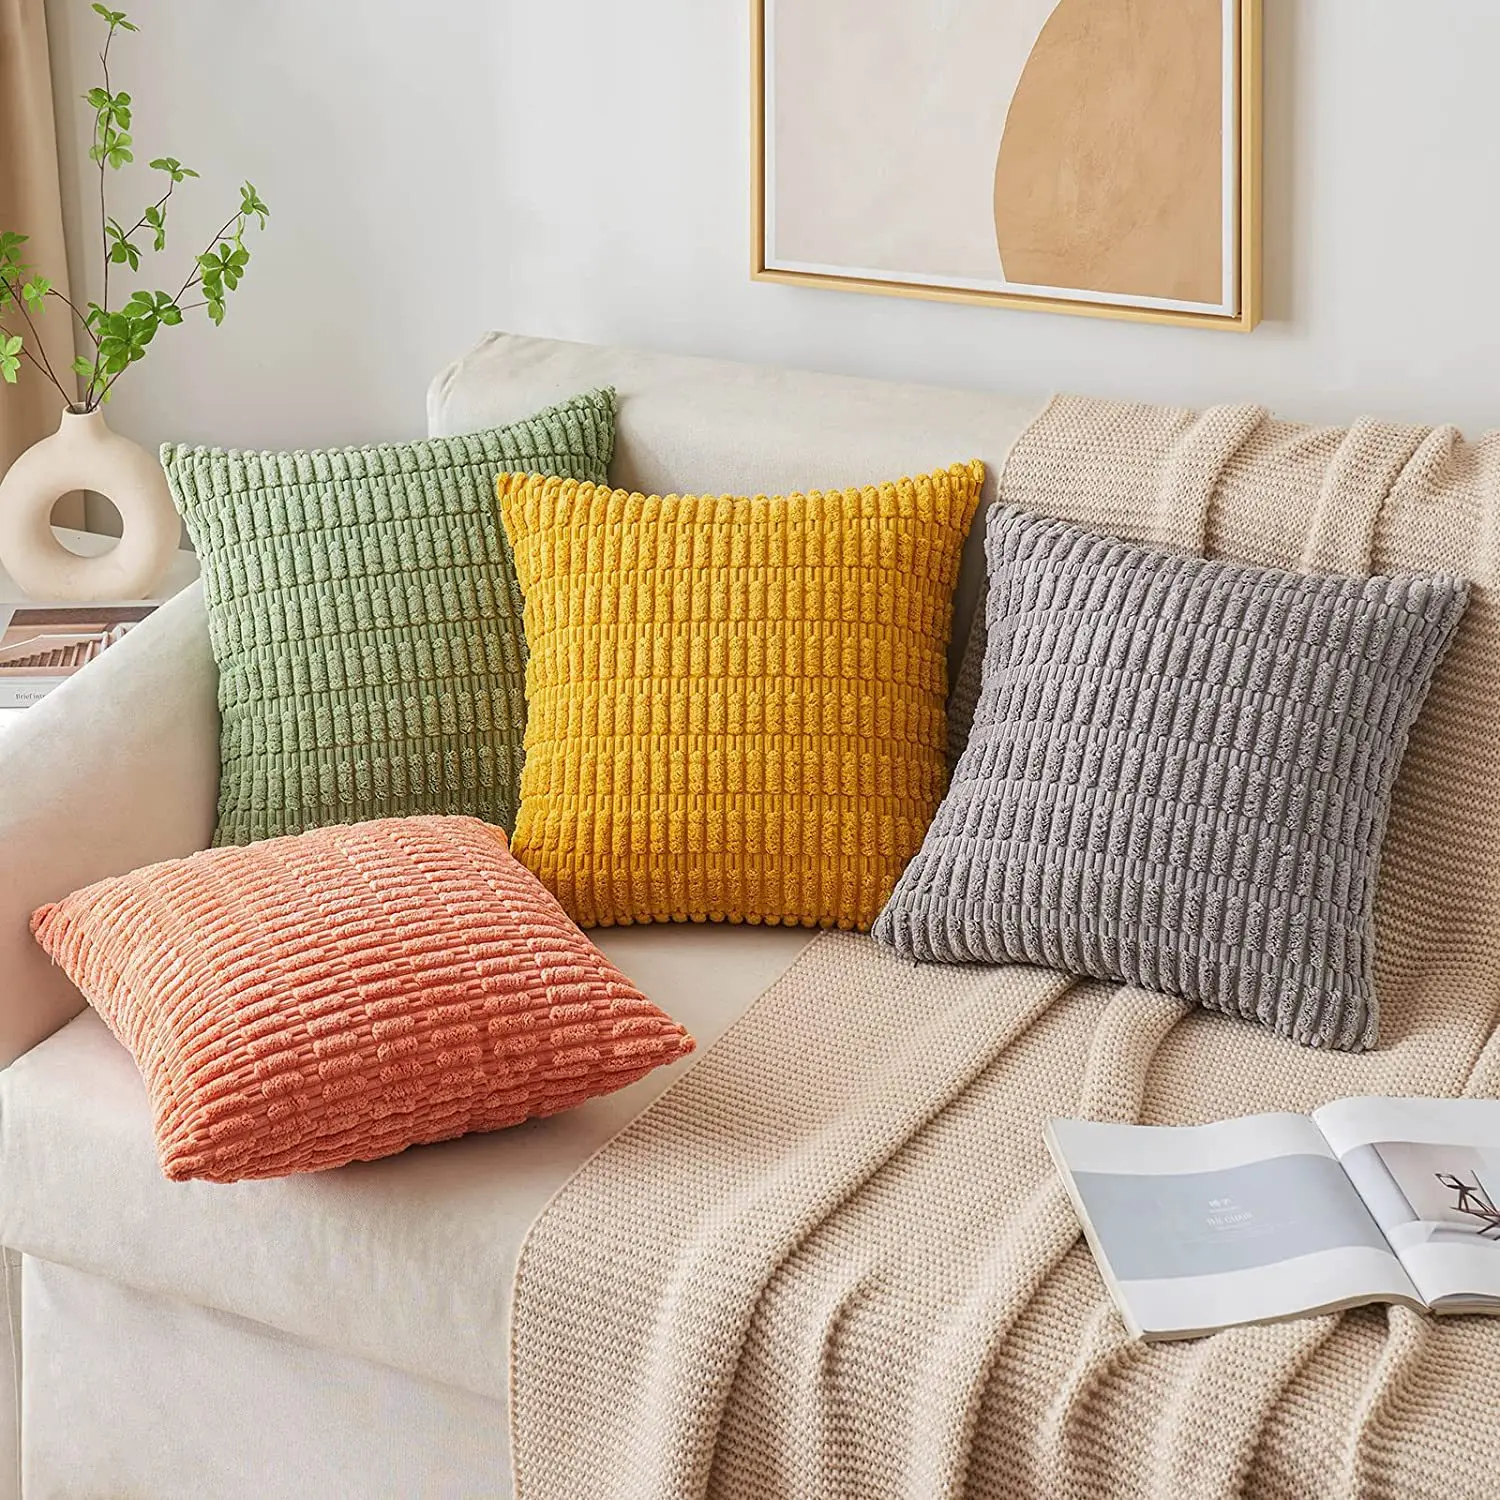 

Striped Corduroy Pillow Cover 40X40 Cojines Decorativos Para Sofa Soild Color Decorative Home Throw Square Cushion Covers